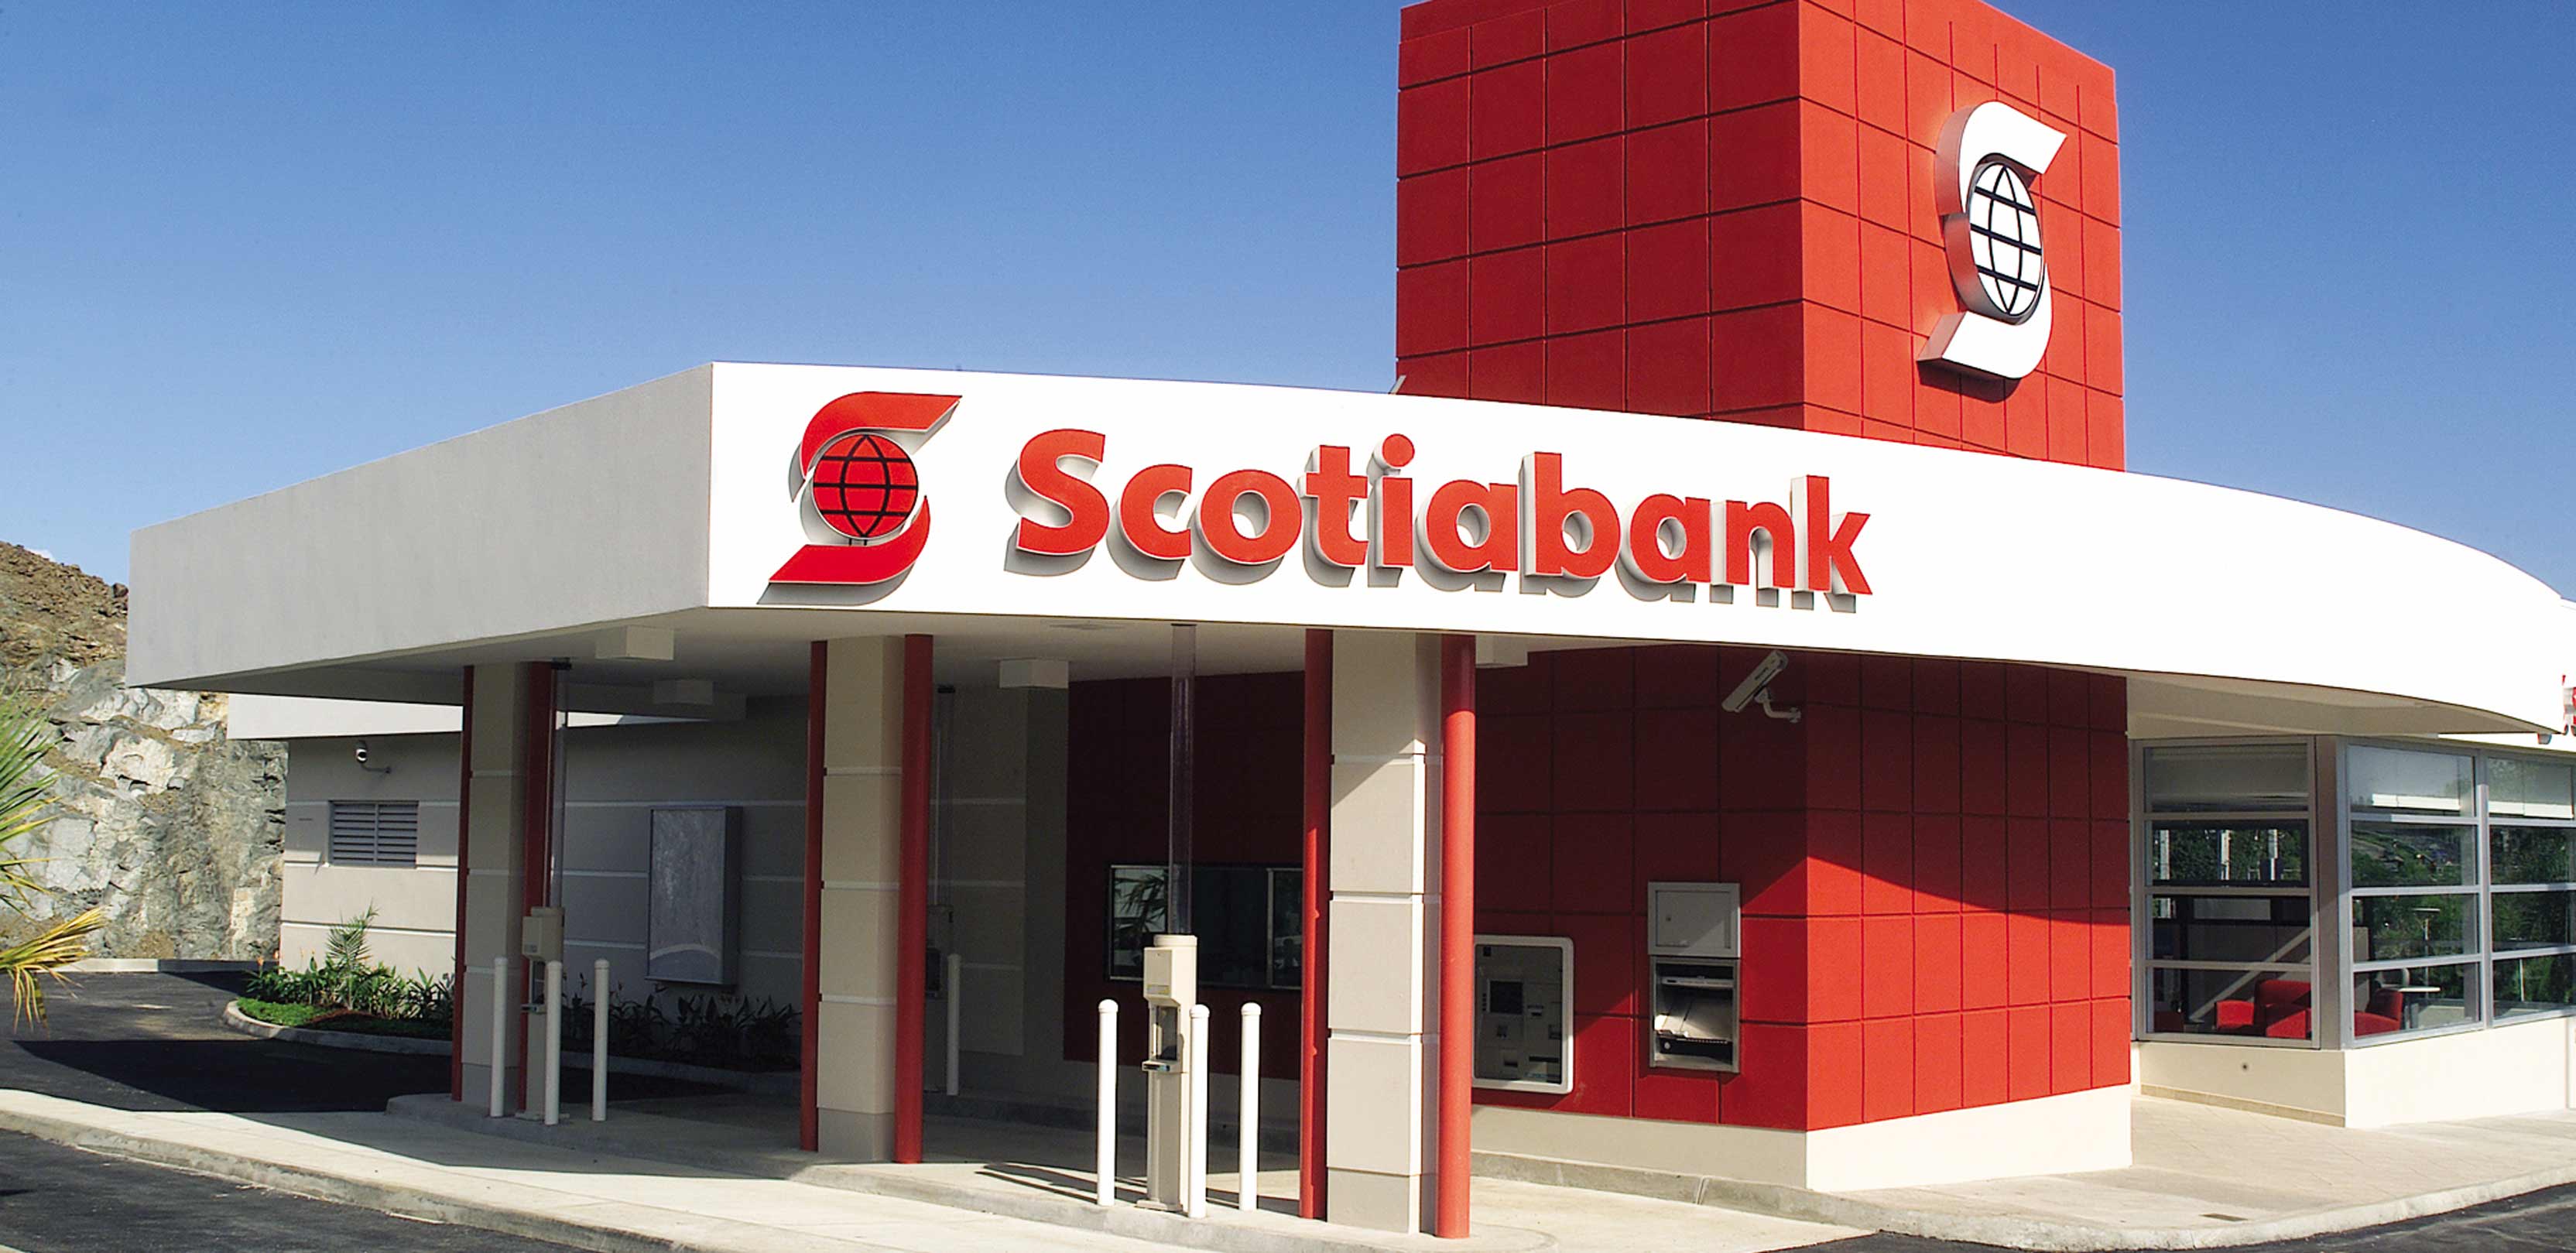 Scotiabank Storefront